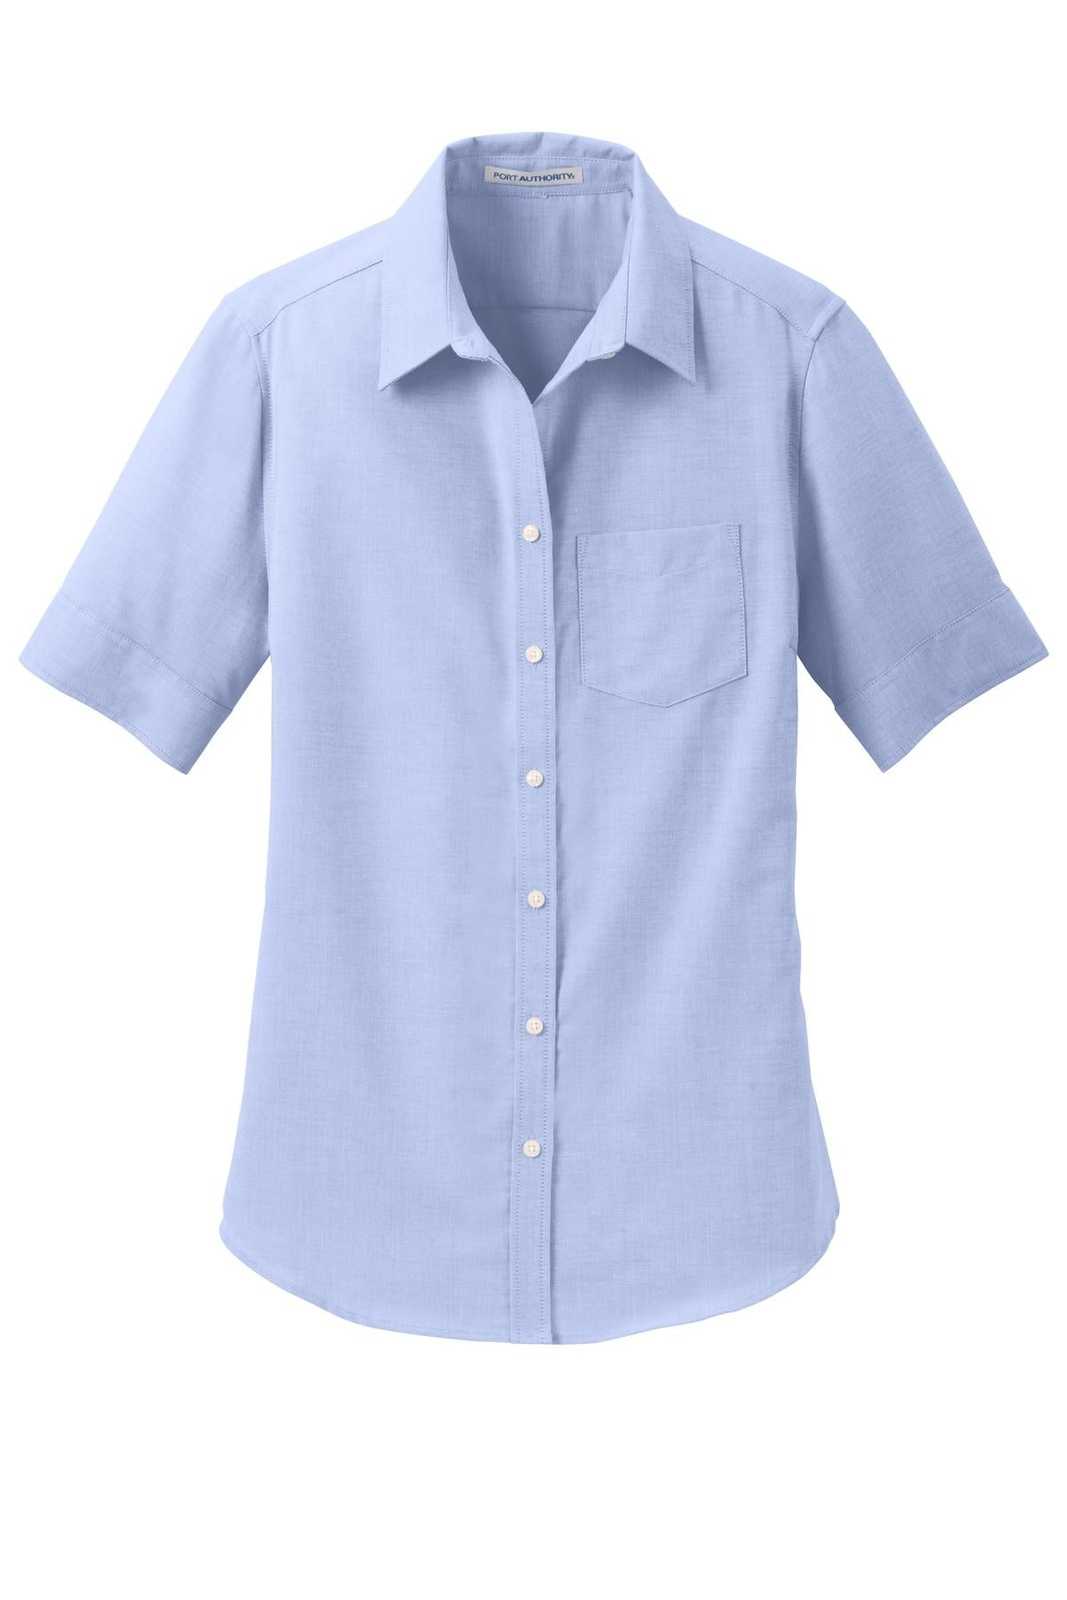 Port Authority L659 Ladies Short Sleeve Superpro Oxford Shirt - Oxford Blue - HIT a Double - 5